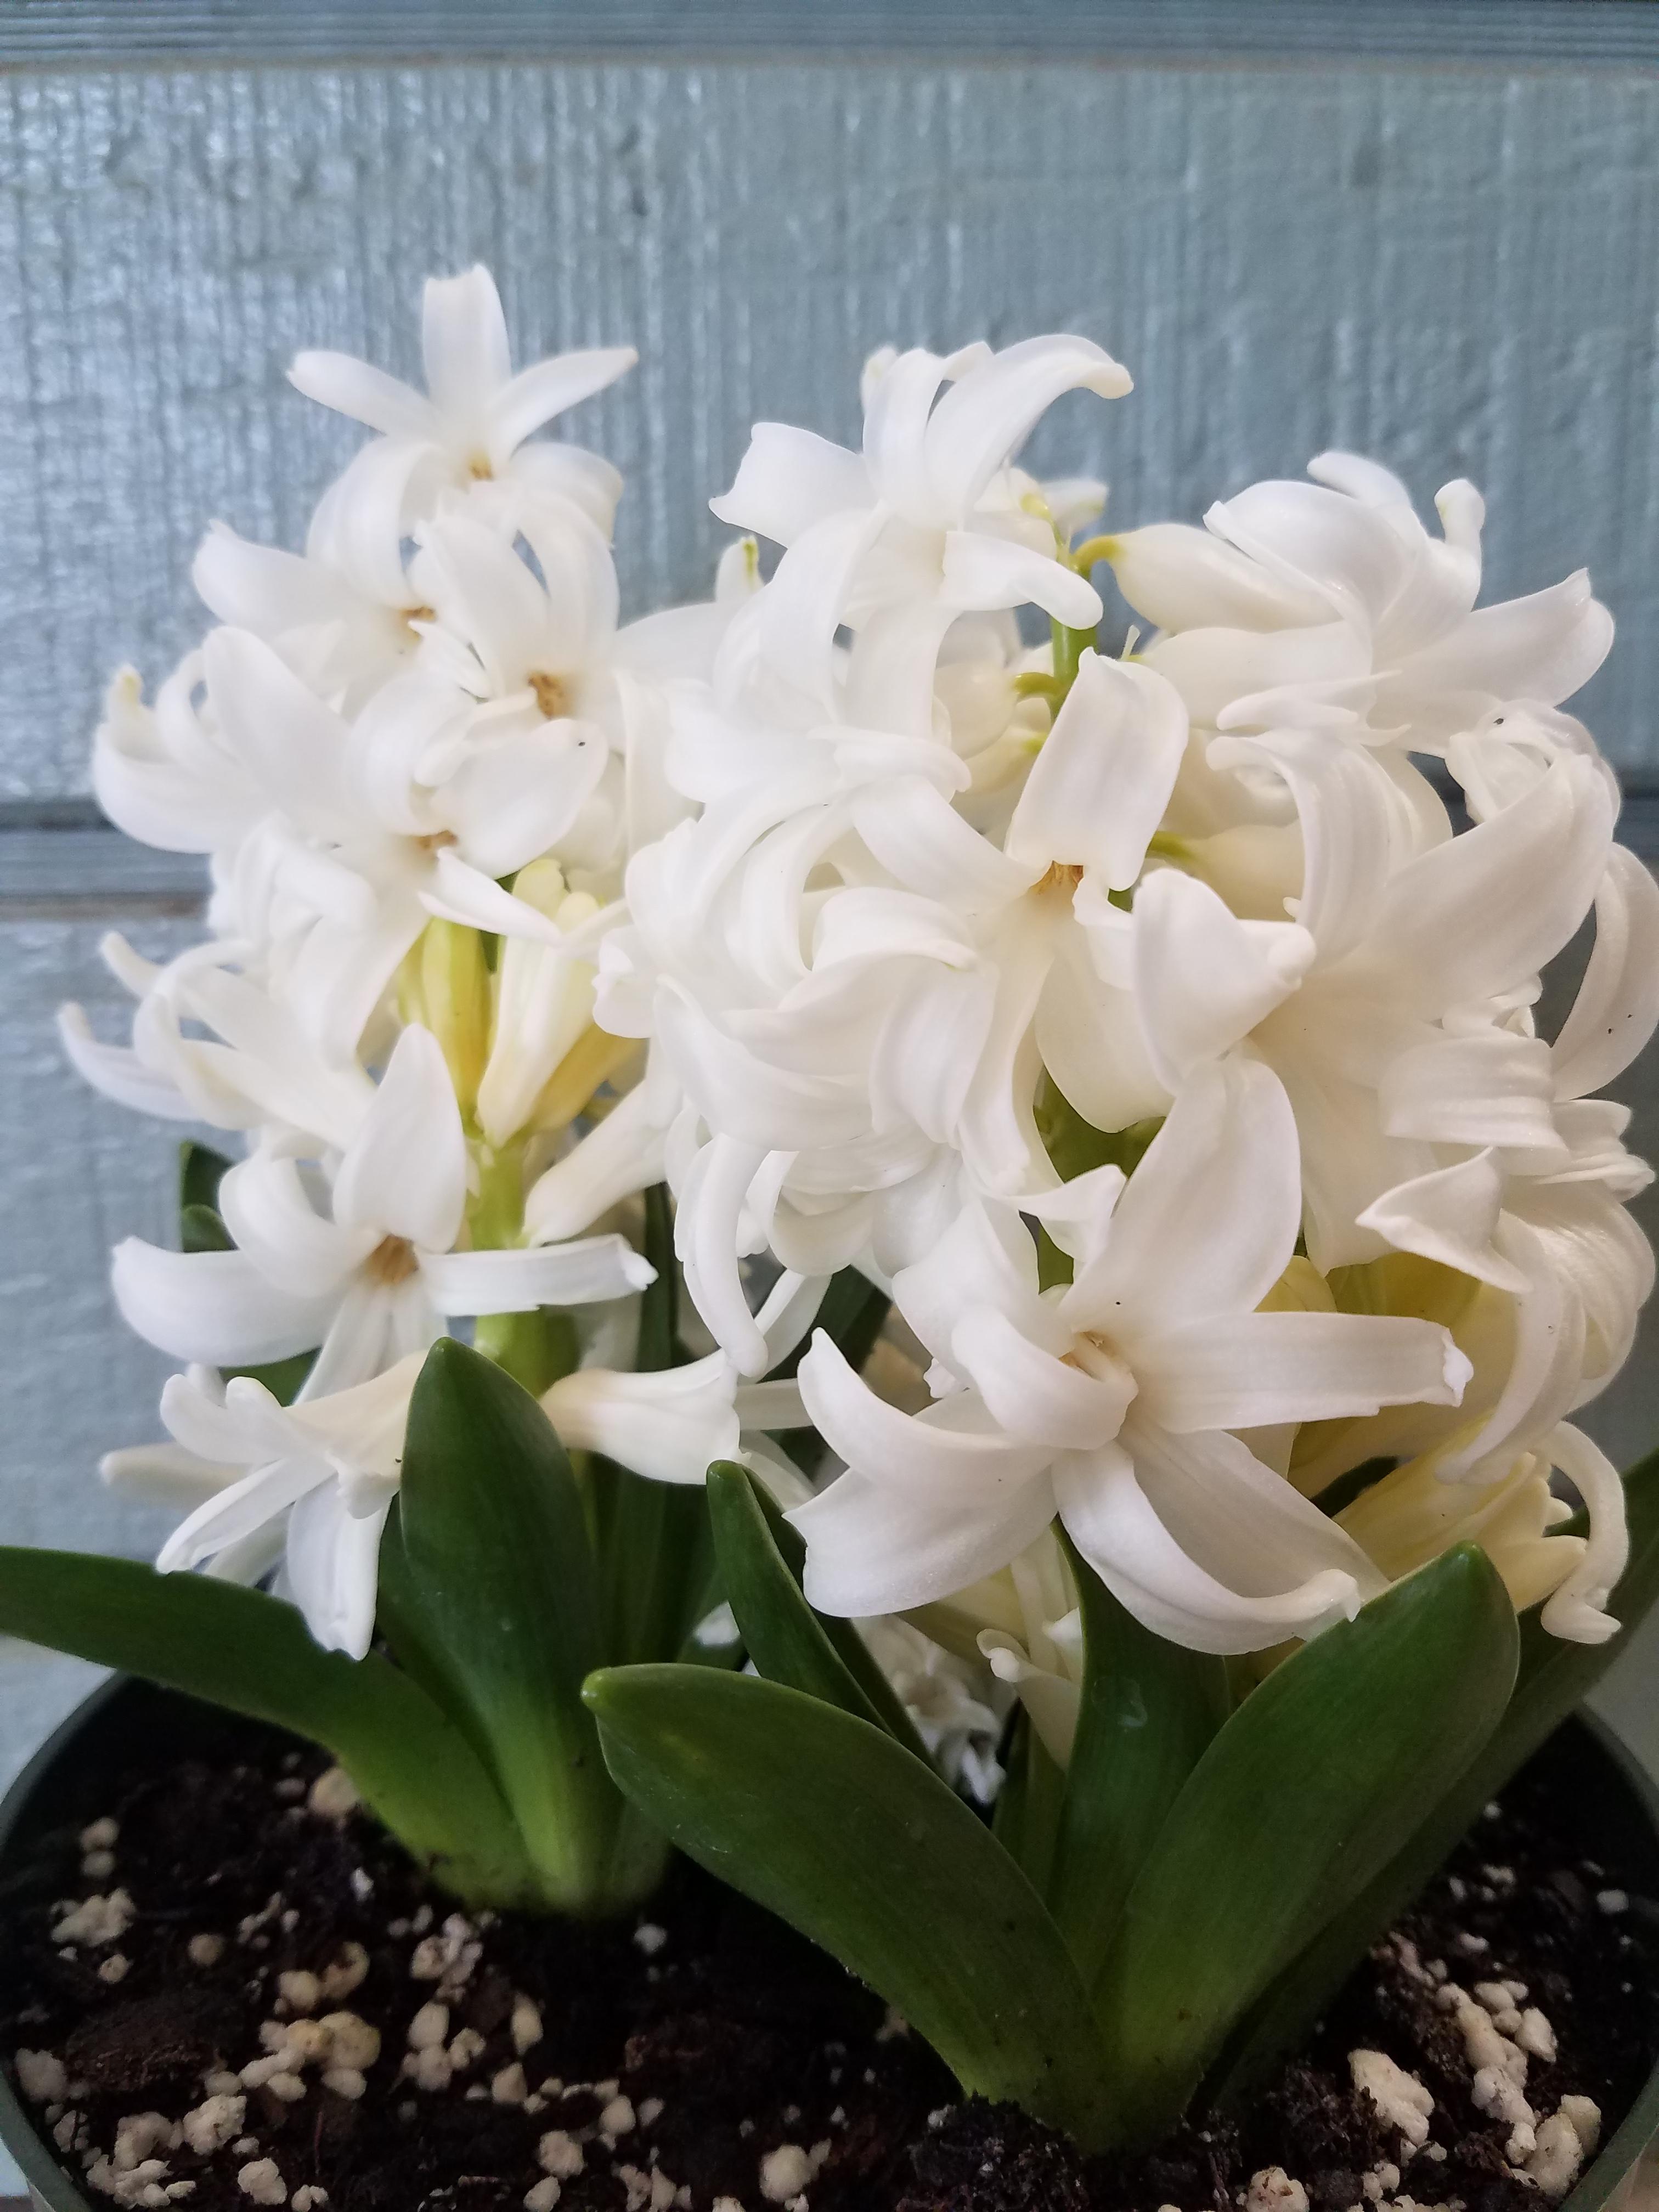 Hyacinth 'White Pearl' - Hyacinth from Leo Berbee Bulb Company